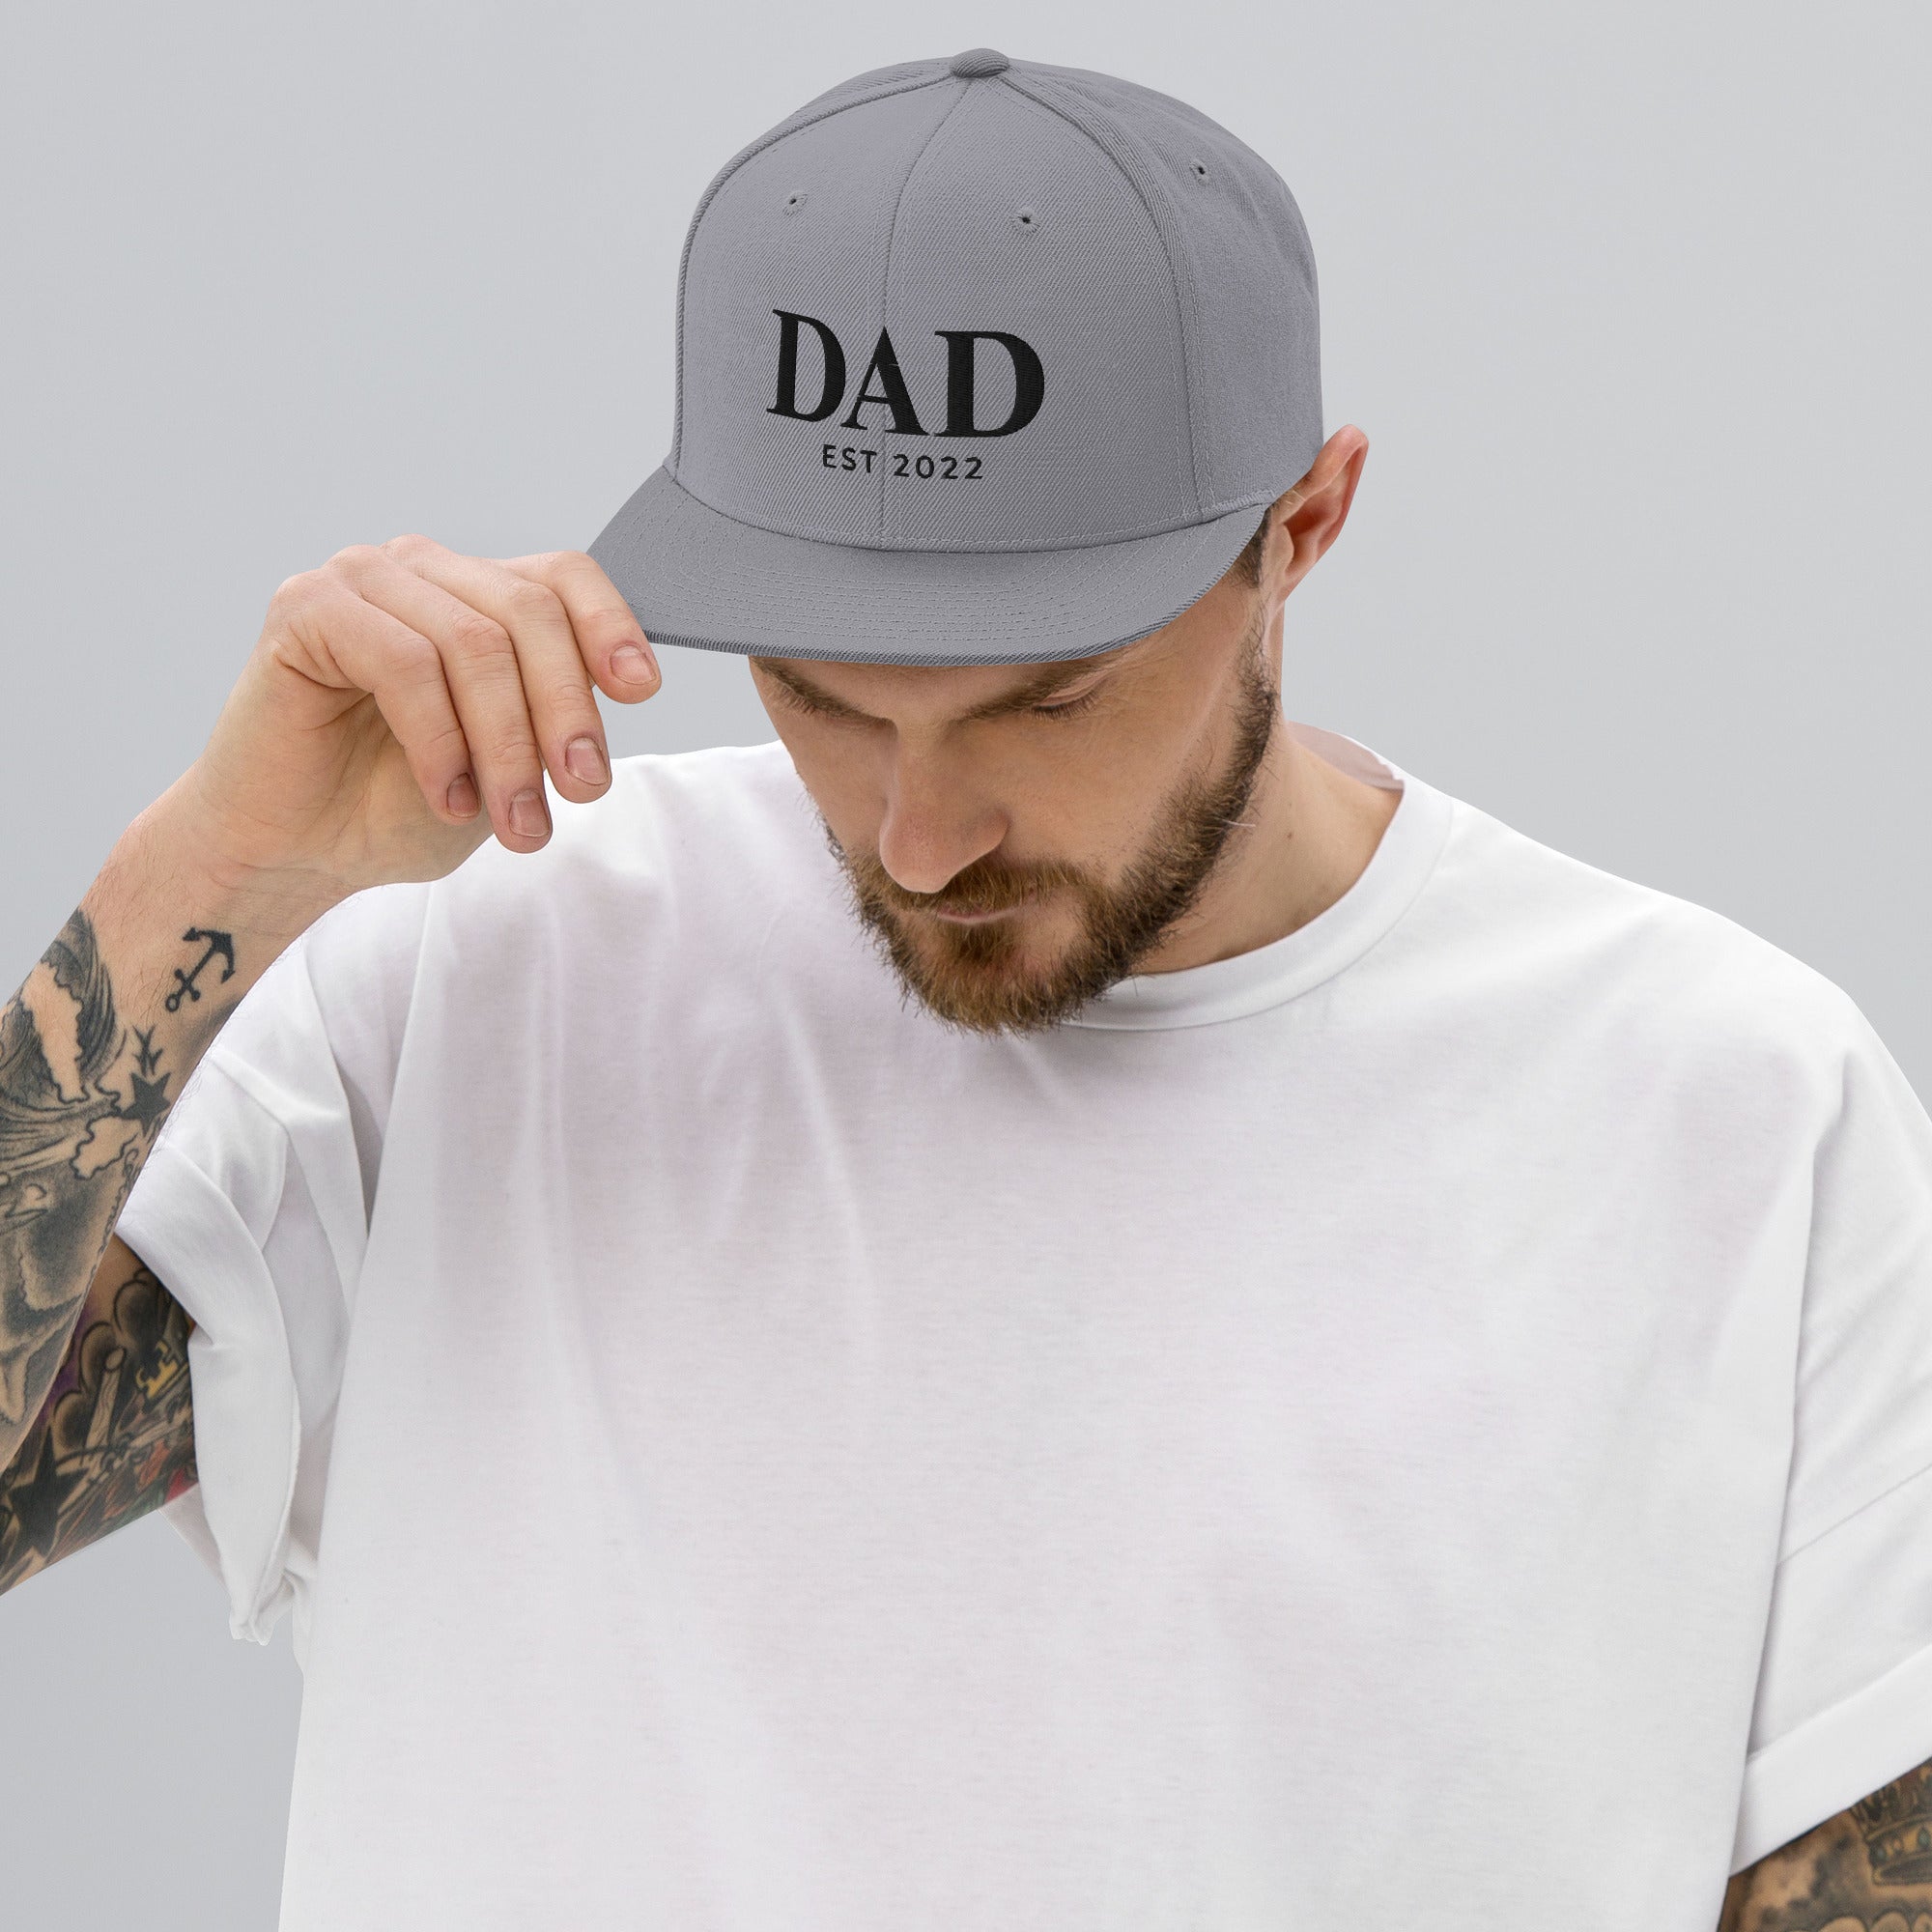 – Odds The DAD 2022 Snapback Ends Hat Store & EST